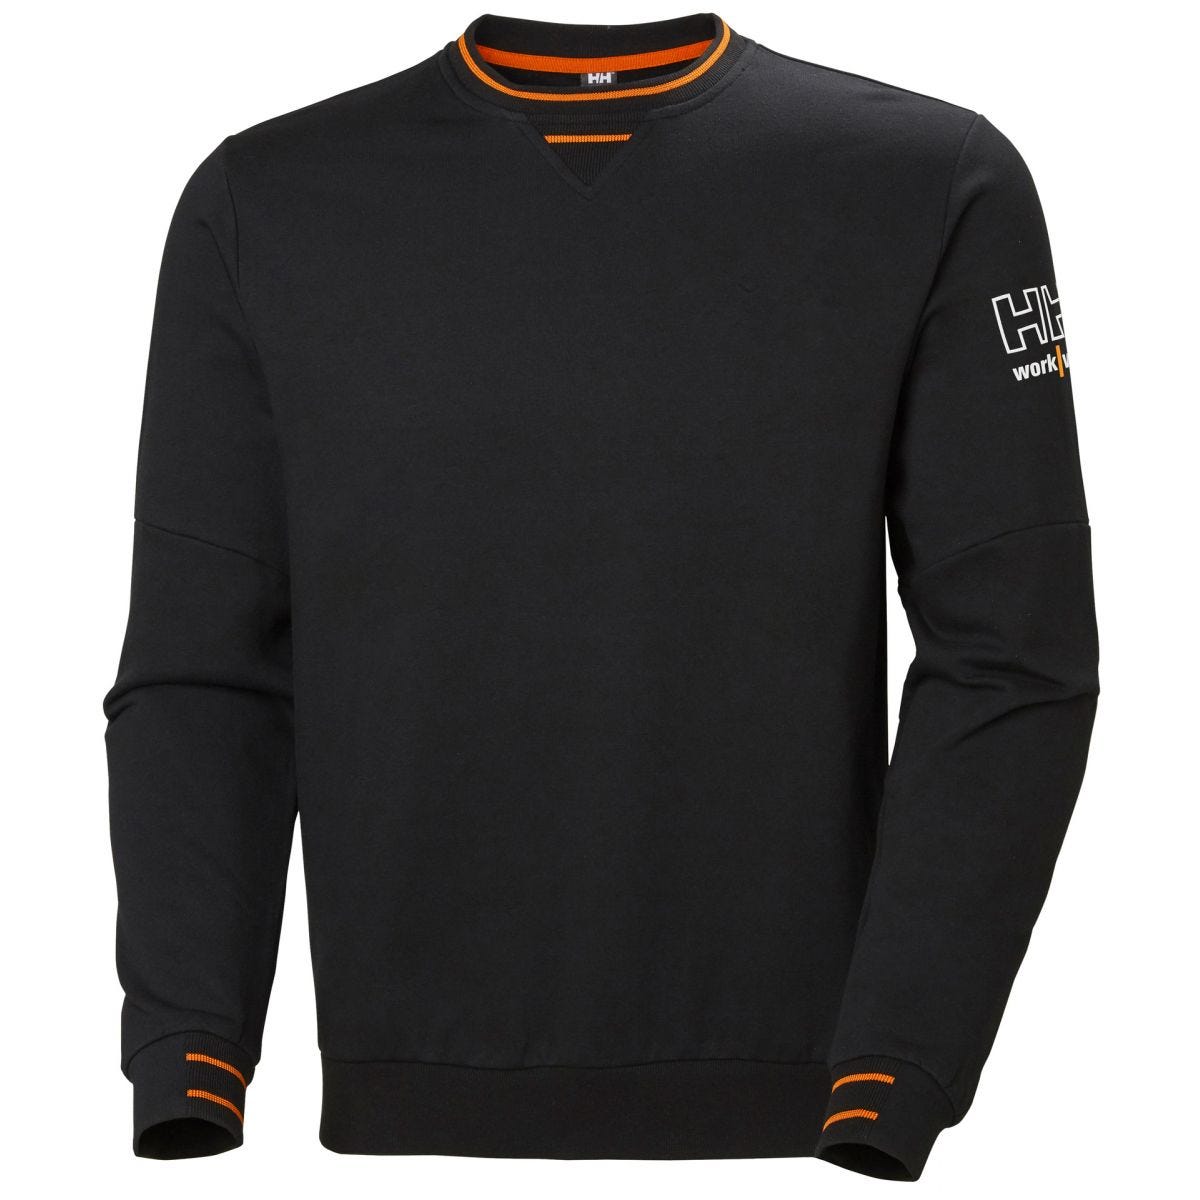 Sweatshirt Kensington Noir - Helly Hansen - Taille 2XL 0